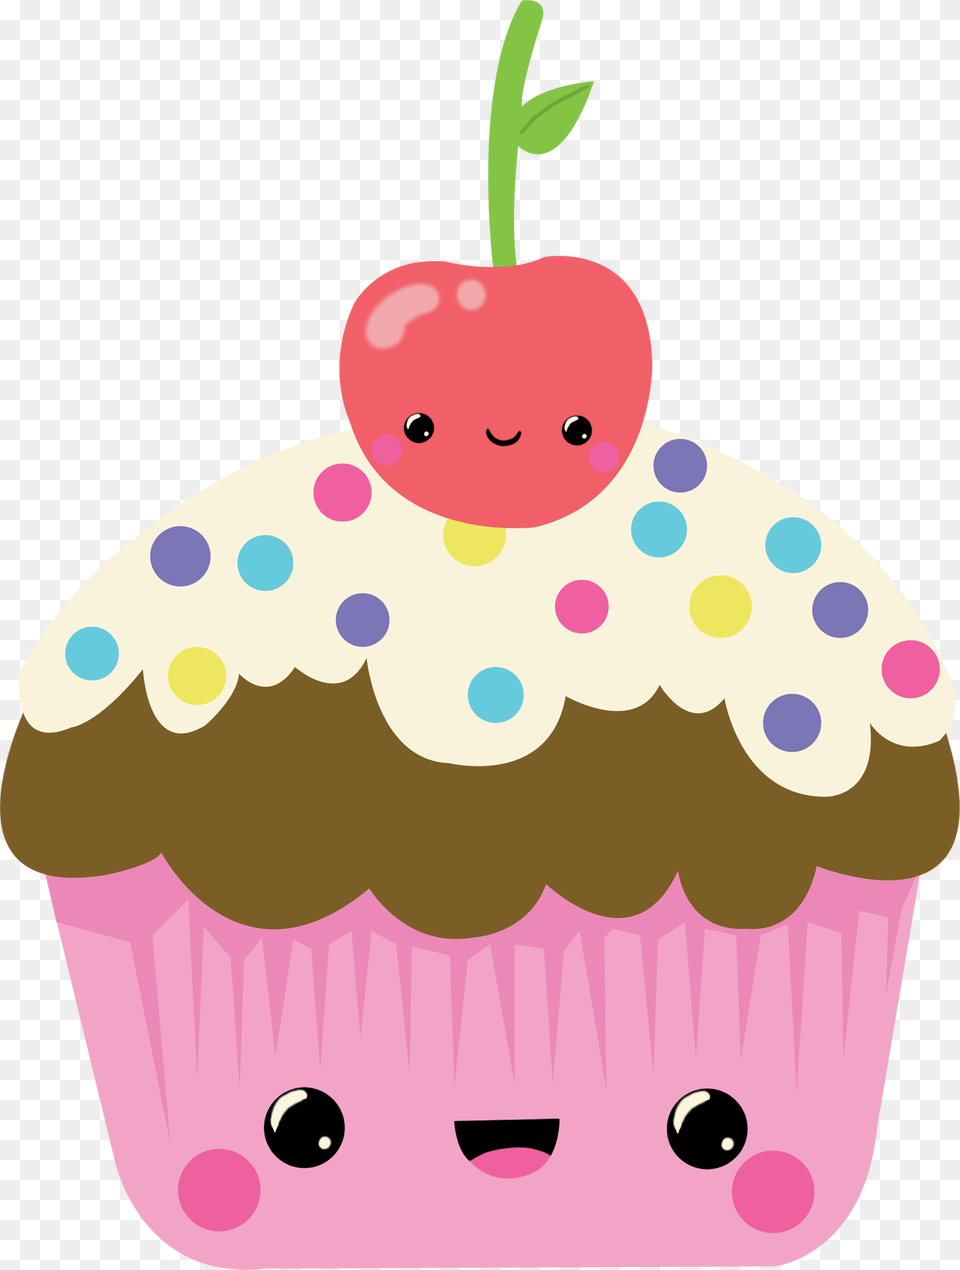 Clip Artbaking Decorating And Bakeware Imagenes De Cupcakes Animados, Cake, Cream, Cupcake, Dessert Free Png Download